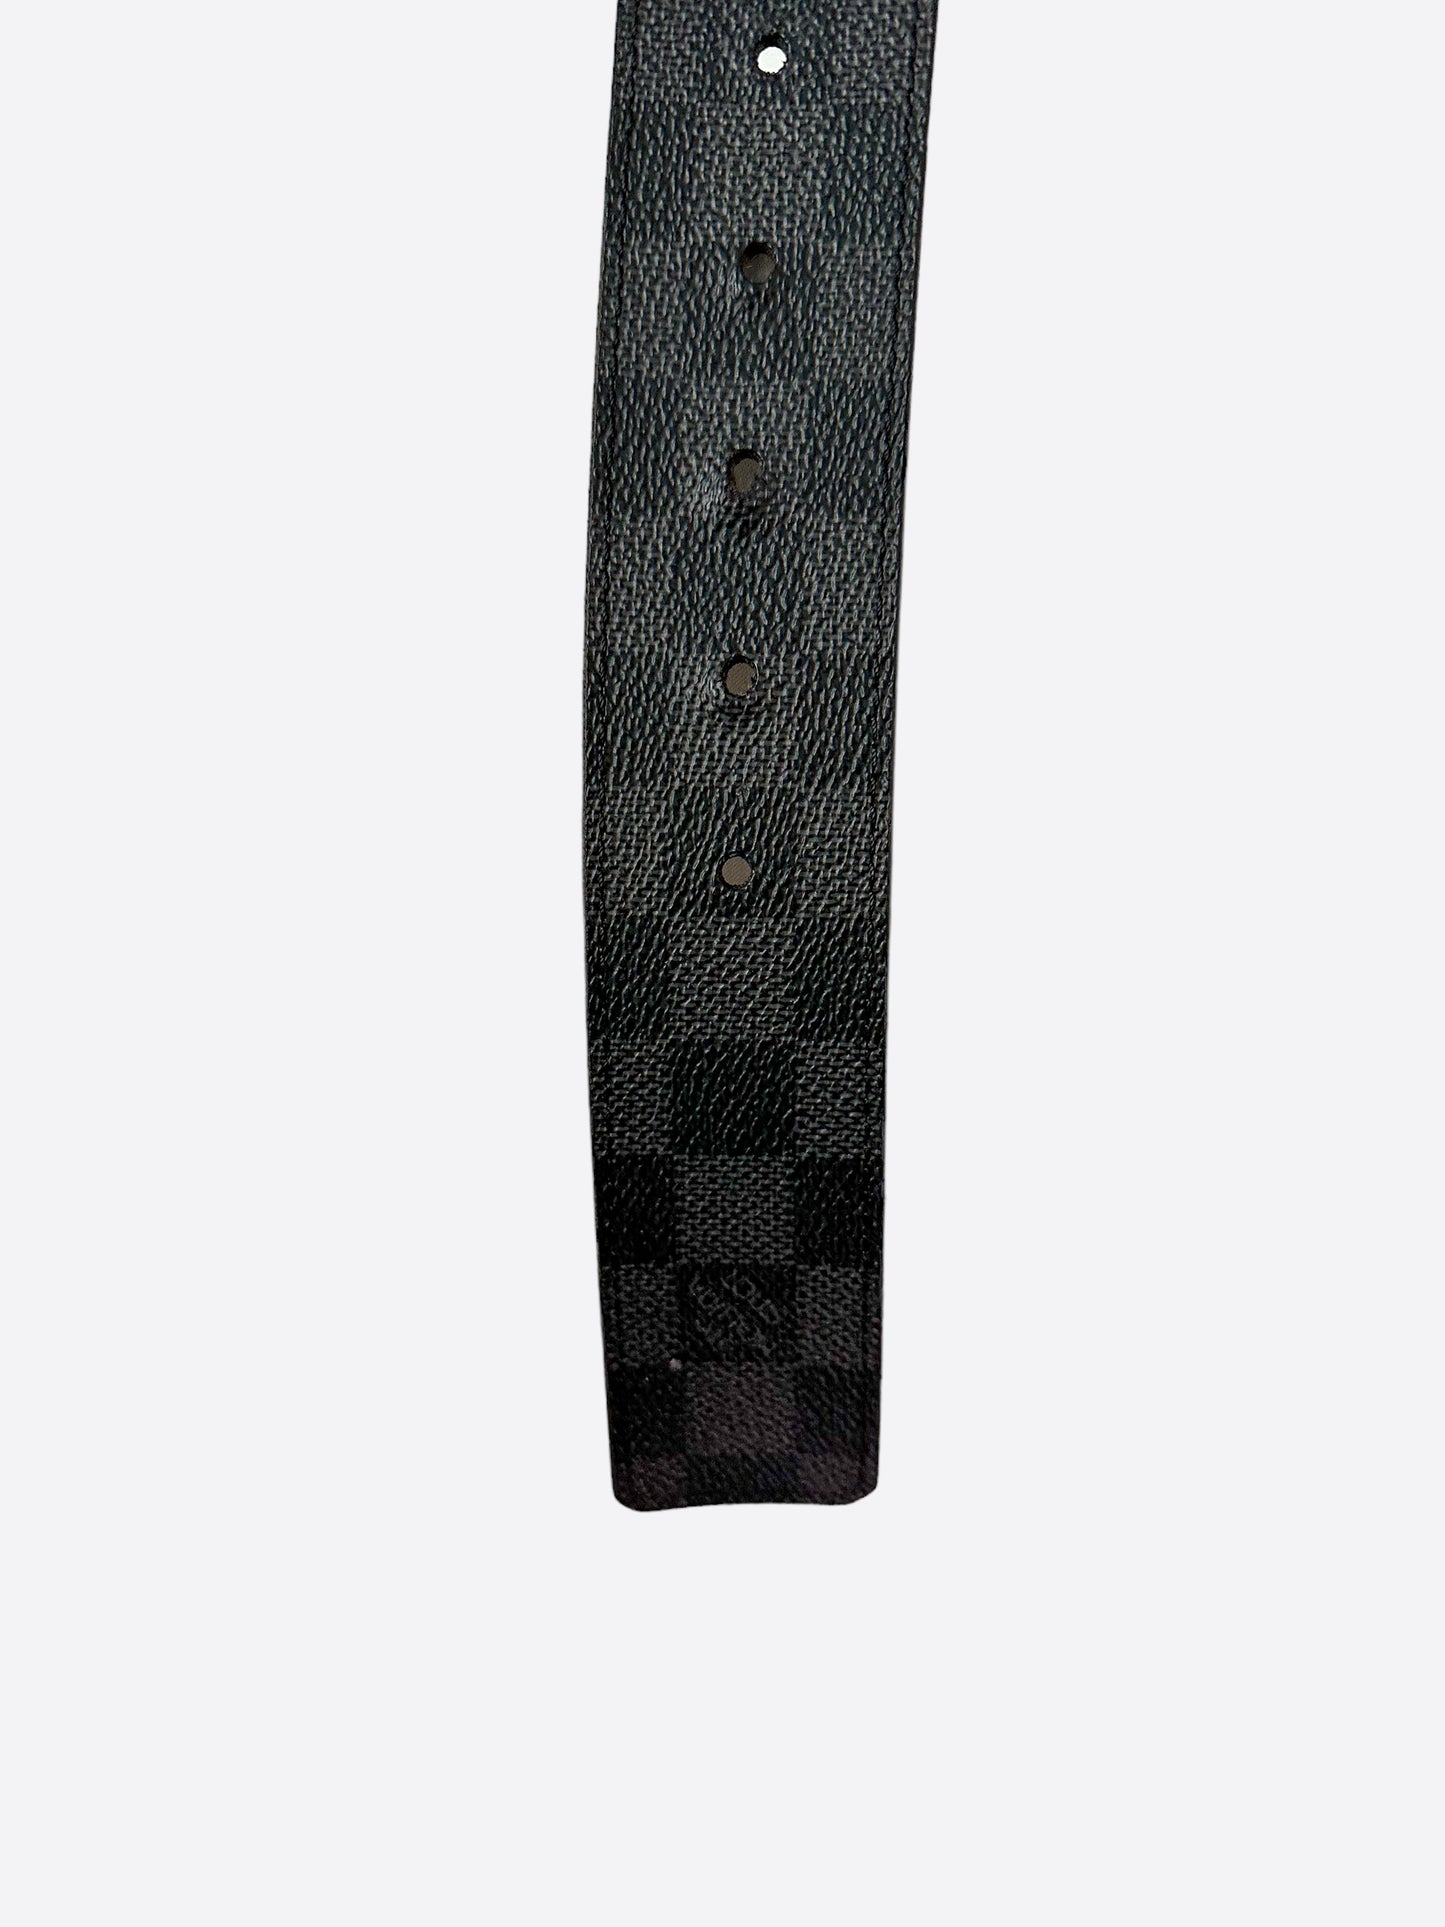 Louis Vuitton Damier Graphite 40MM Belt